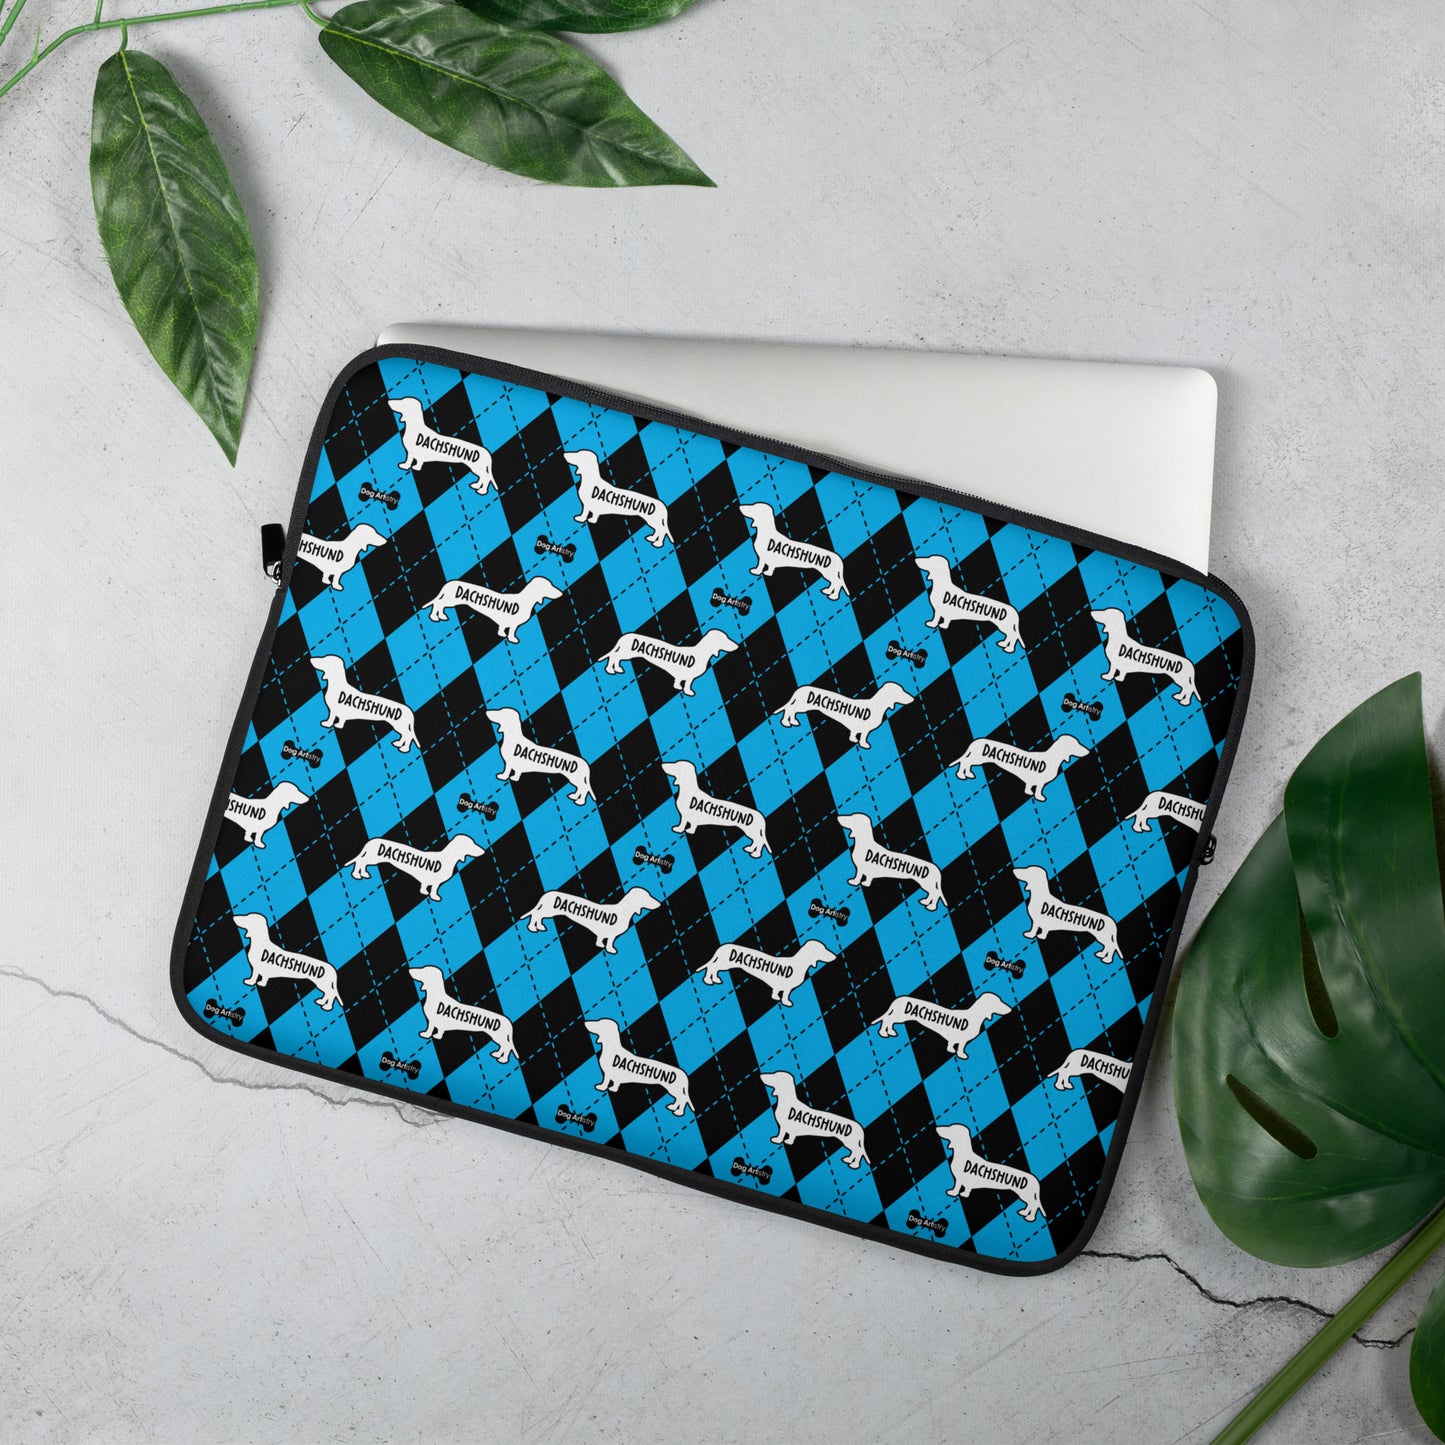 Dachshund blue and black argyle laptop sleeve by Dog Artistry